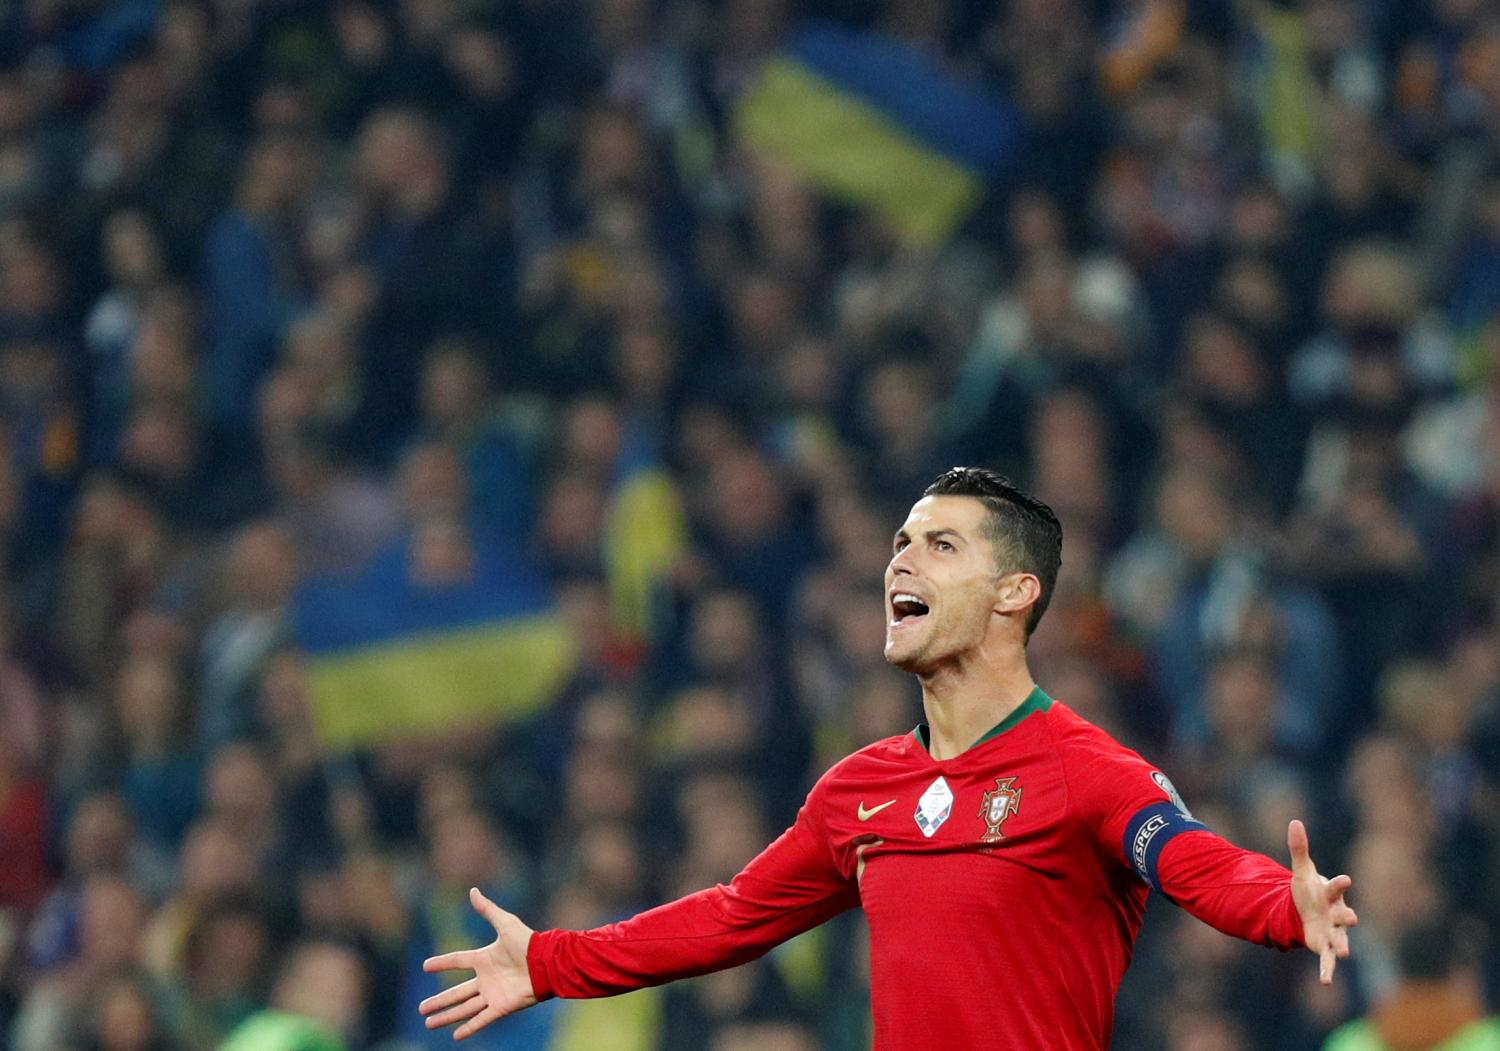 Soccer Football - Euro 2020 Qualifier - Group B - Ukraine v Portugal - NSC Olympiyskiy, Kiev, Ukraine - October 14, 2019  Portugal's Cristiano Ronaldo reacts  REUTERS/Valentyn Ogirenko